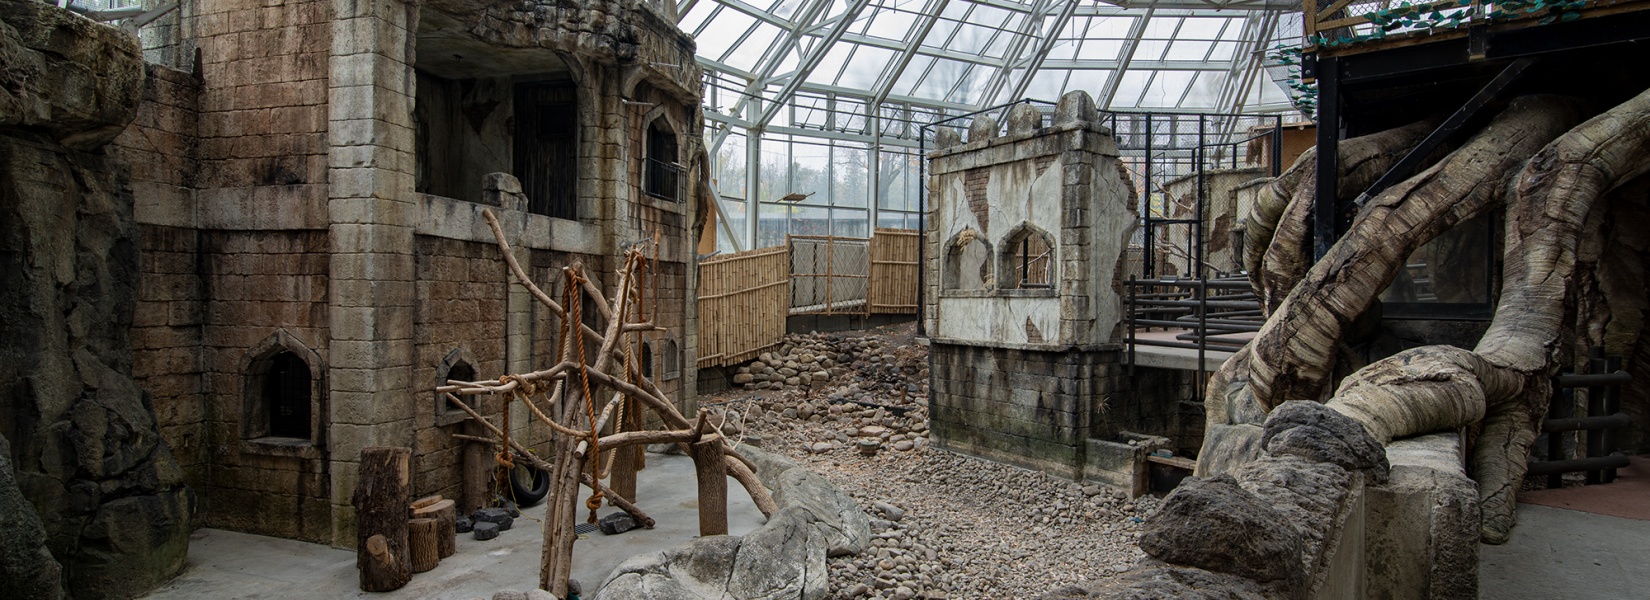 Le zoo abandonné